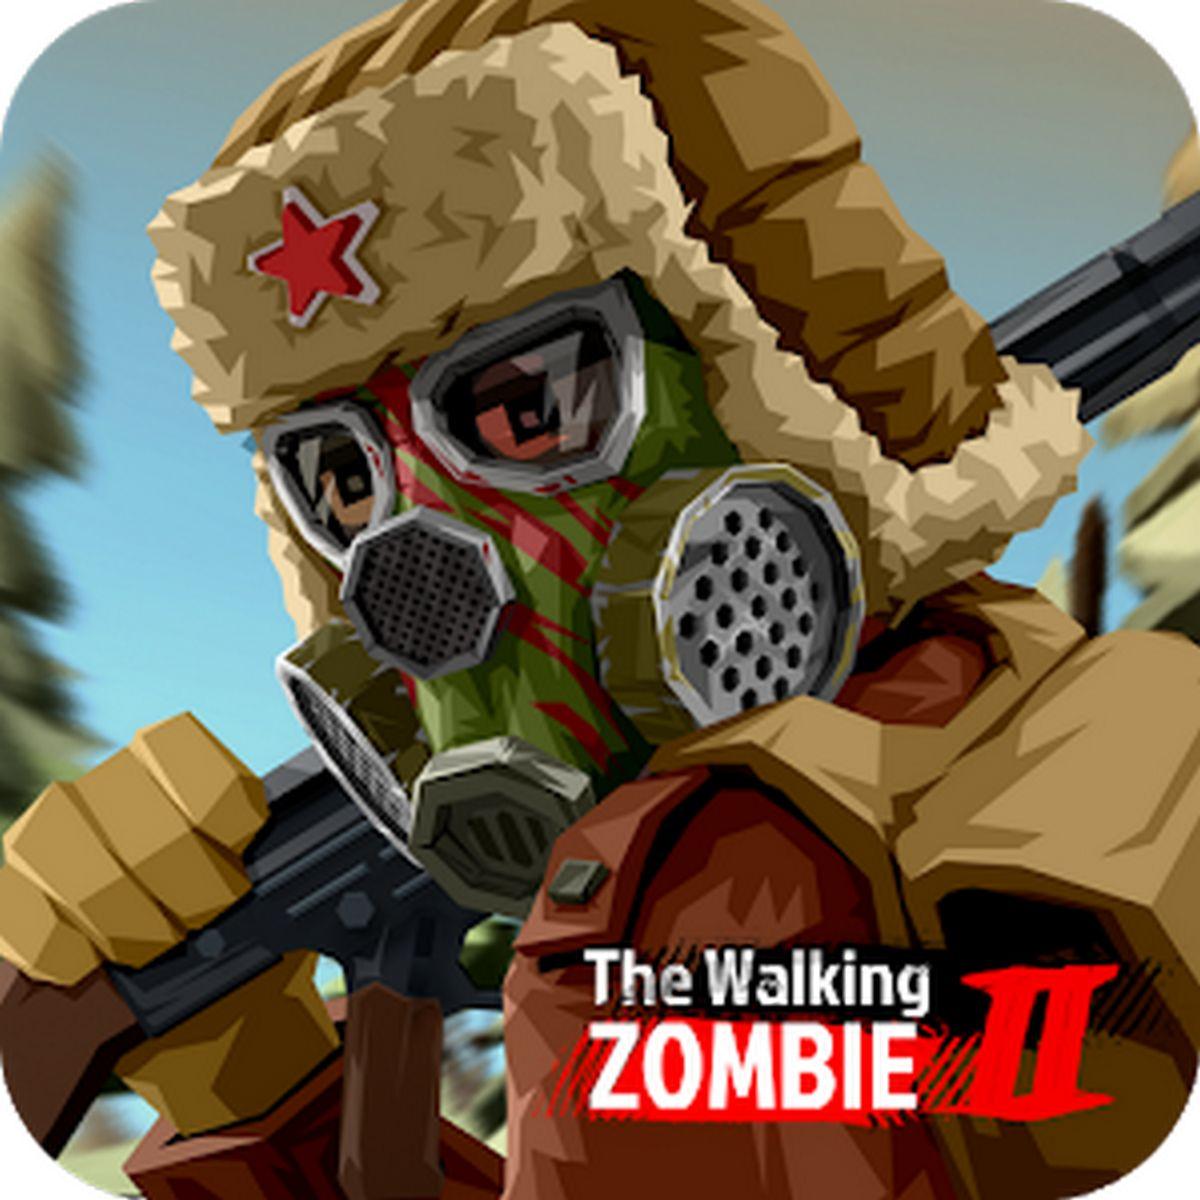 The Walking Zombie 2 Zombie shooter APK MOD